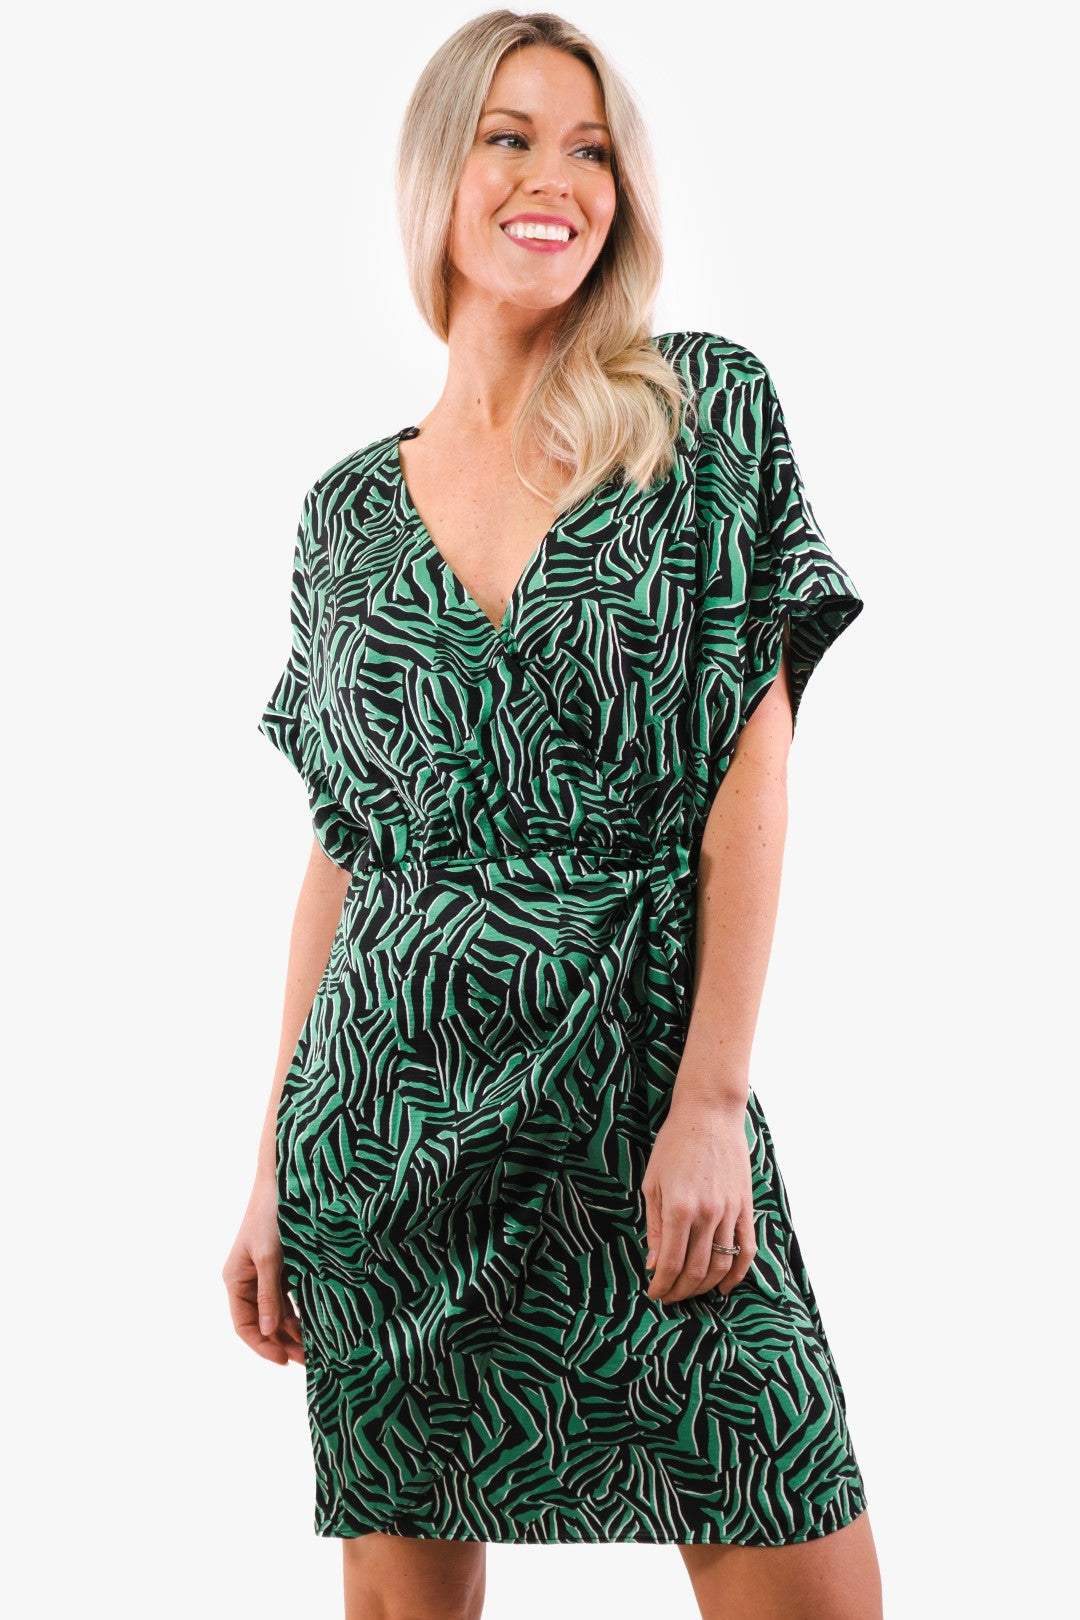 Boutique Option-Michael Kors Green Dress(Kors-Mr381F37Vs-311)